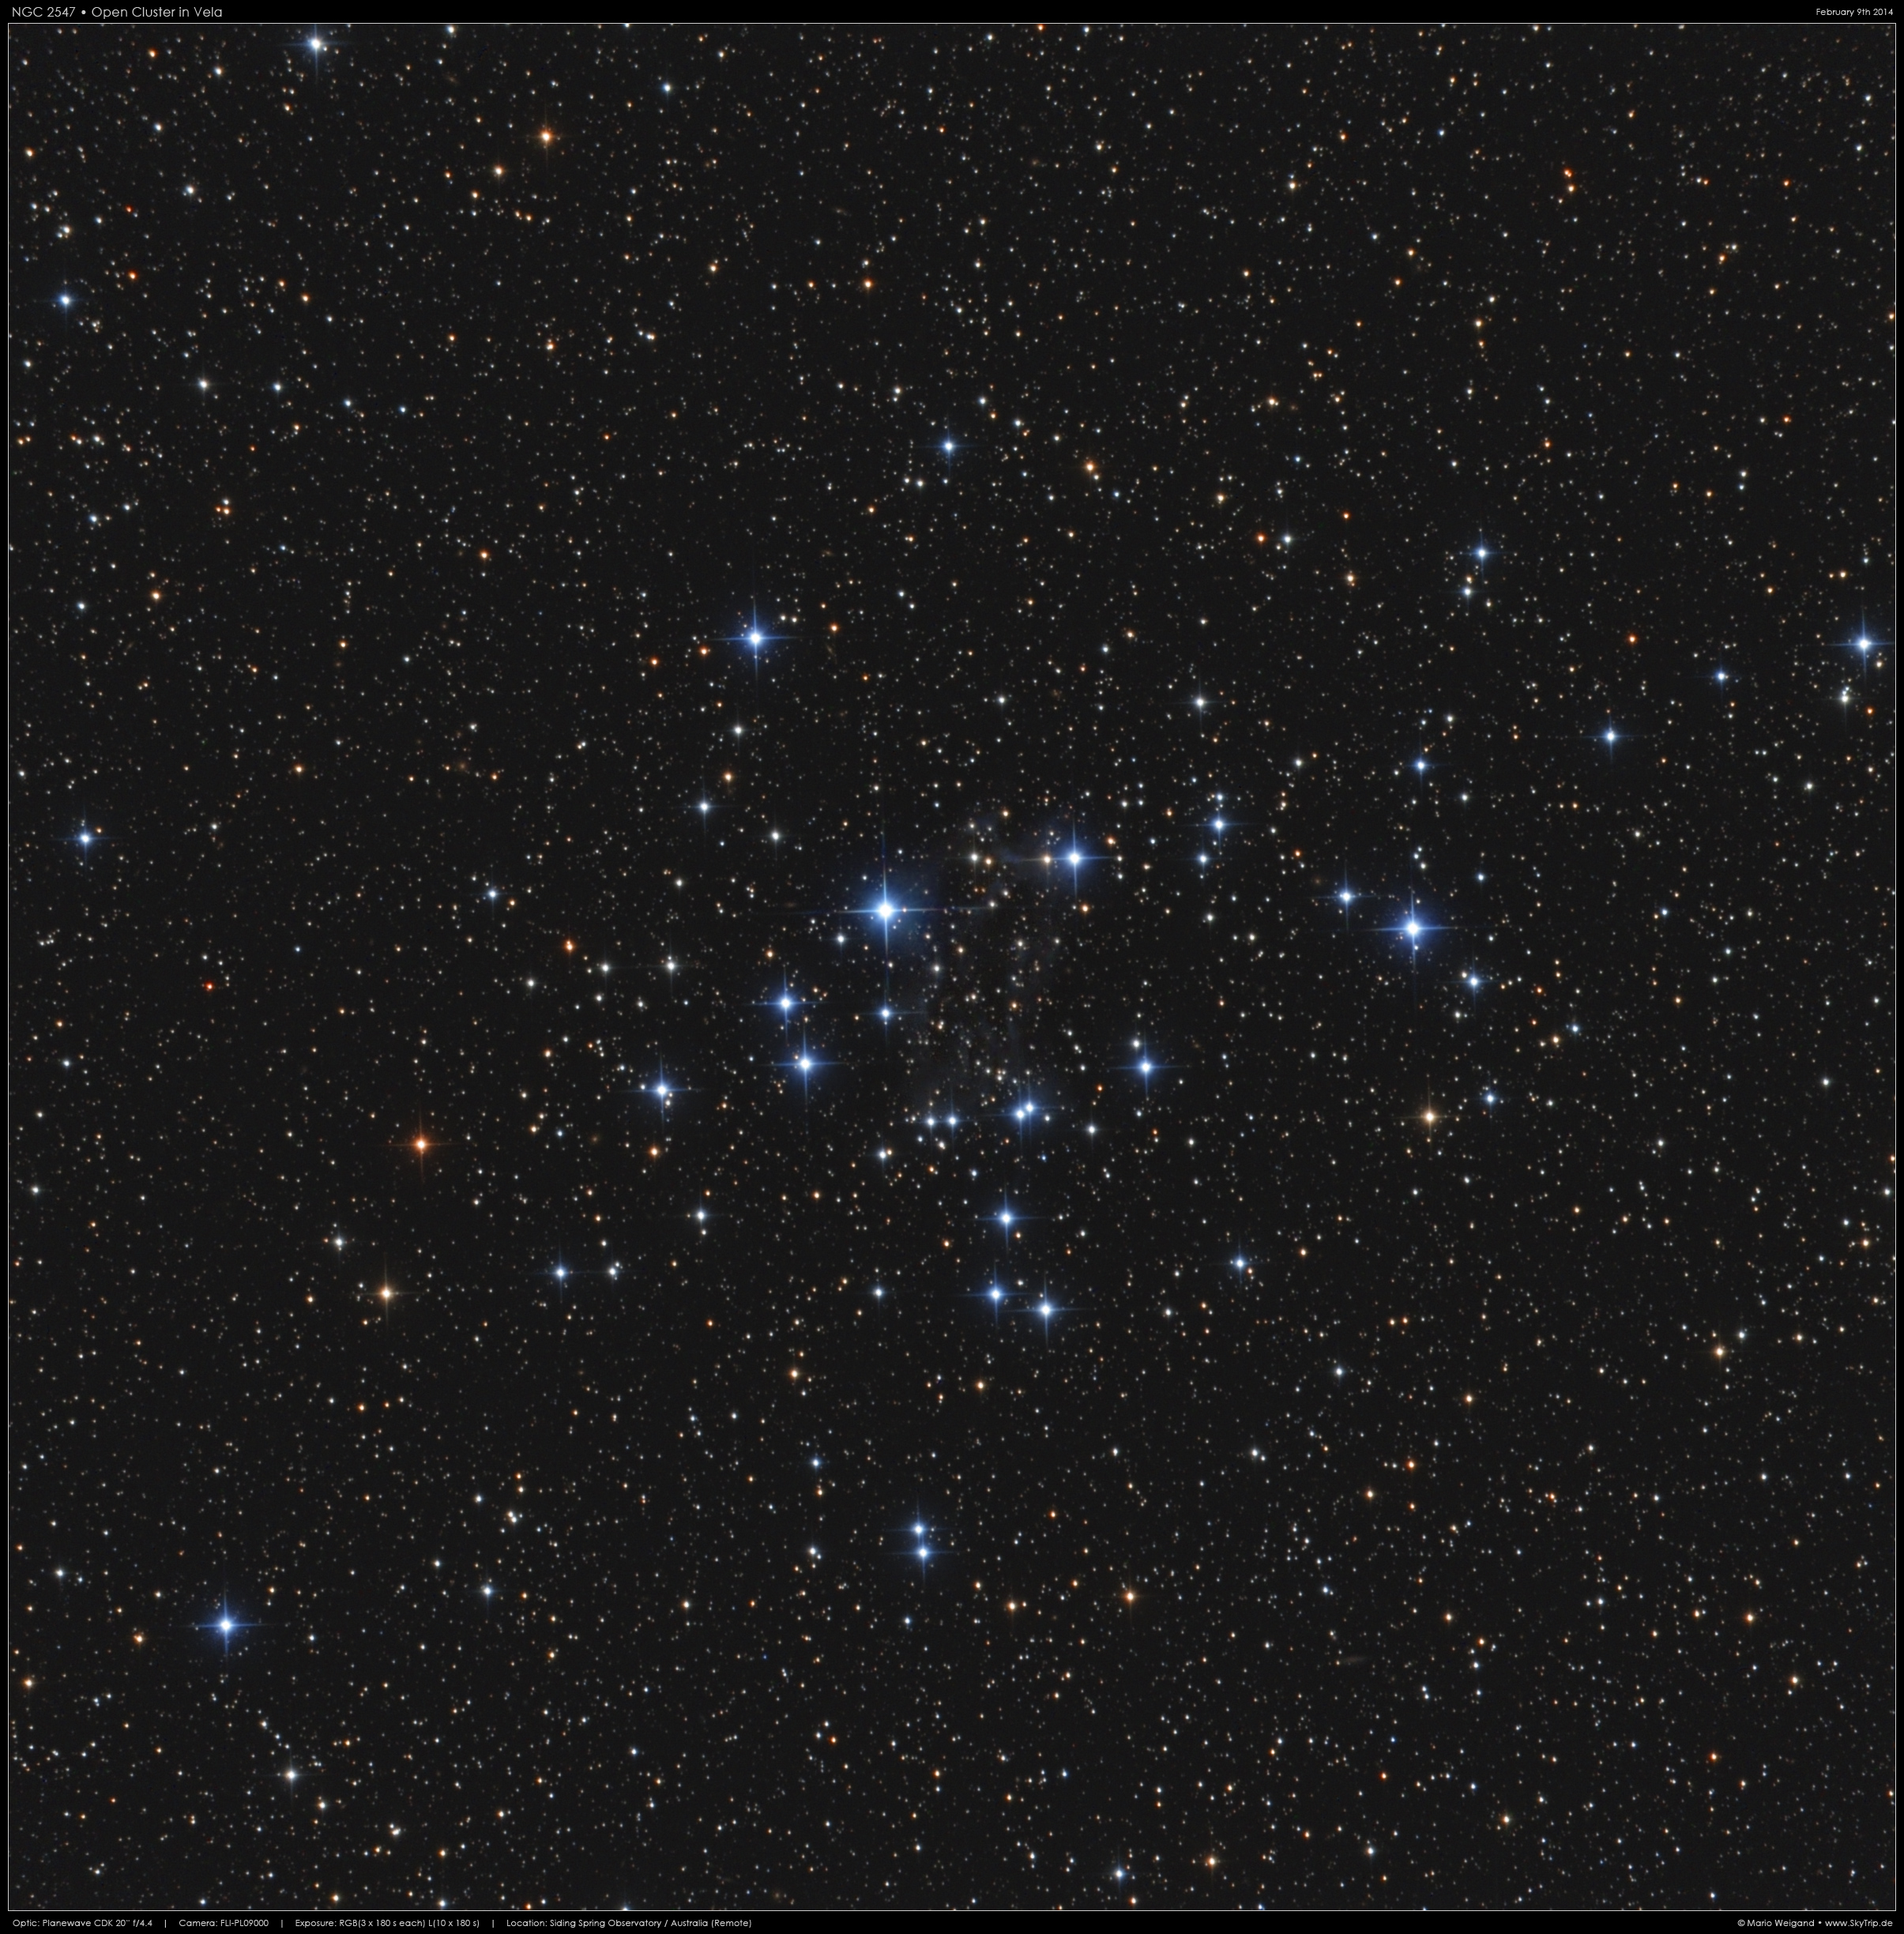 NGC 2547 in Vela